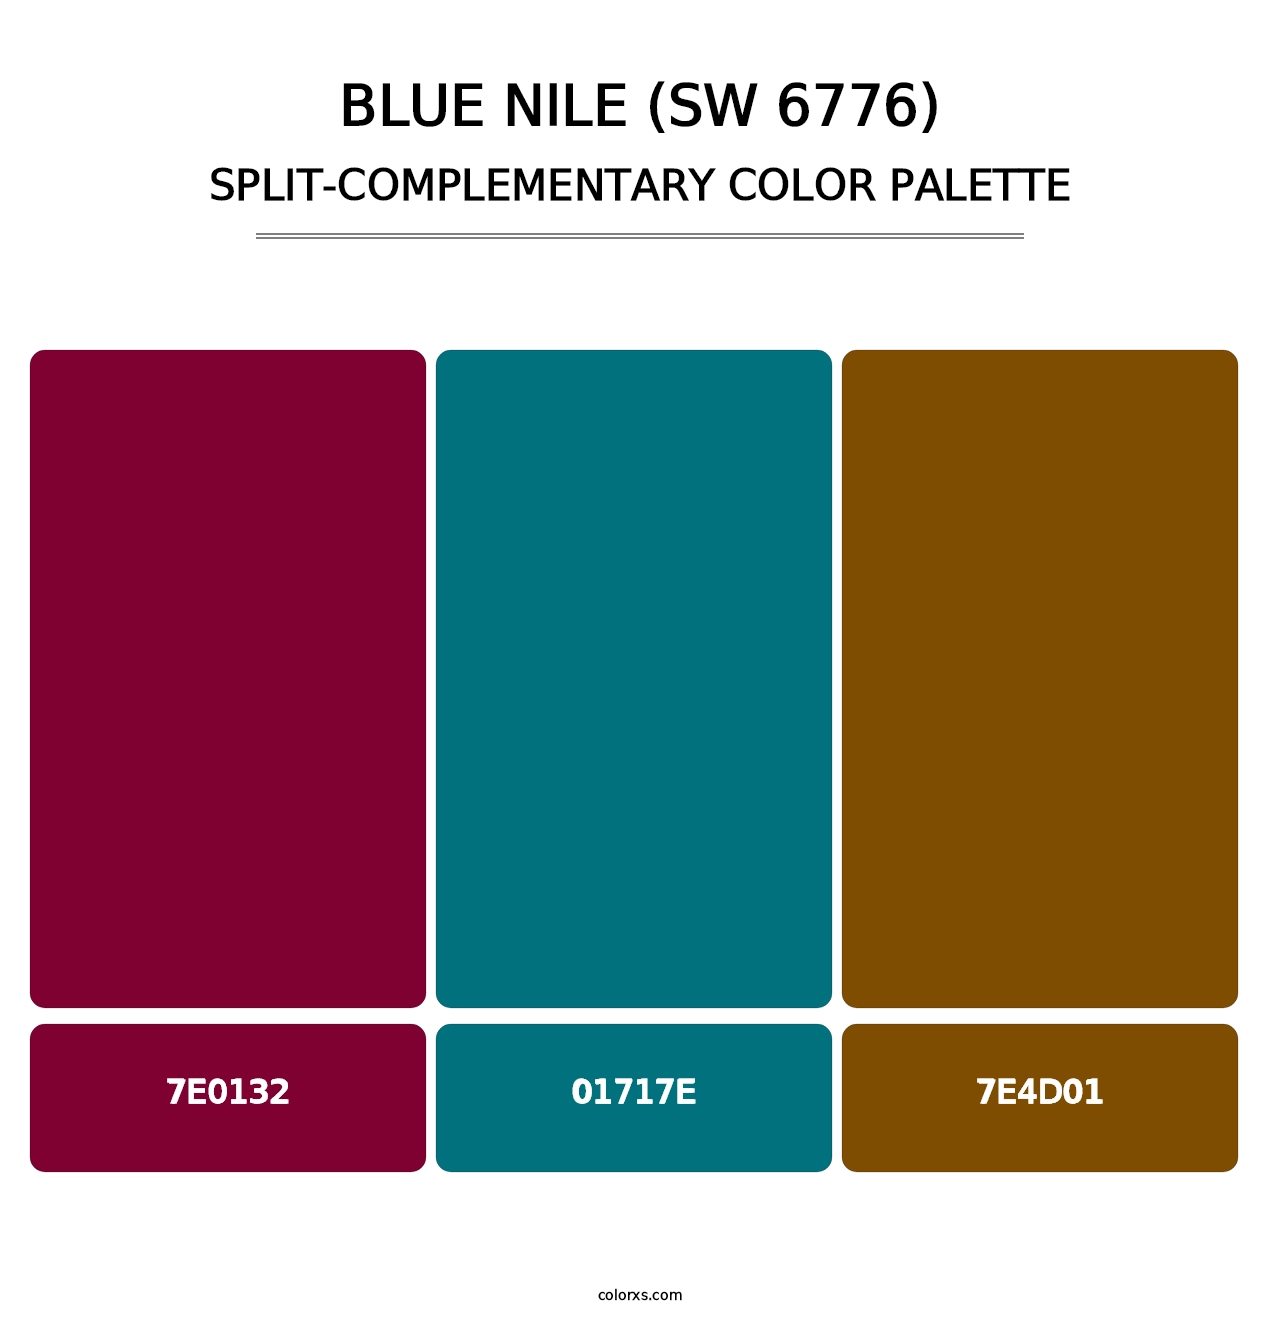 Blue Nile (SW 6776) - Split-Complementary Color Palette